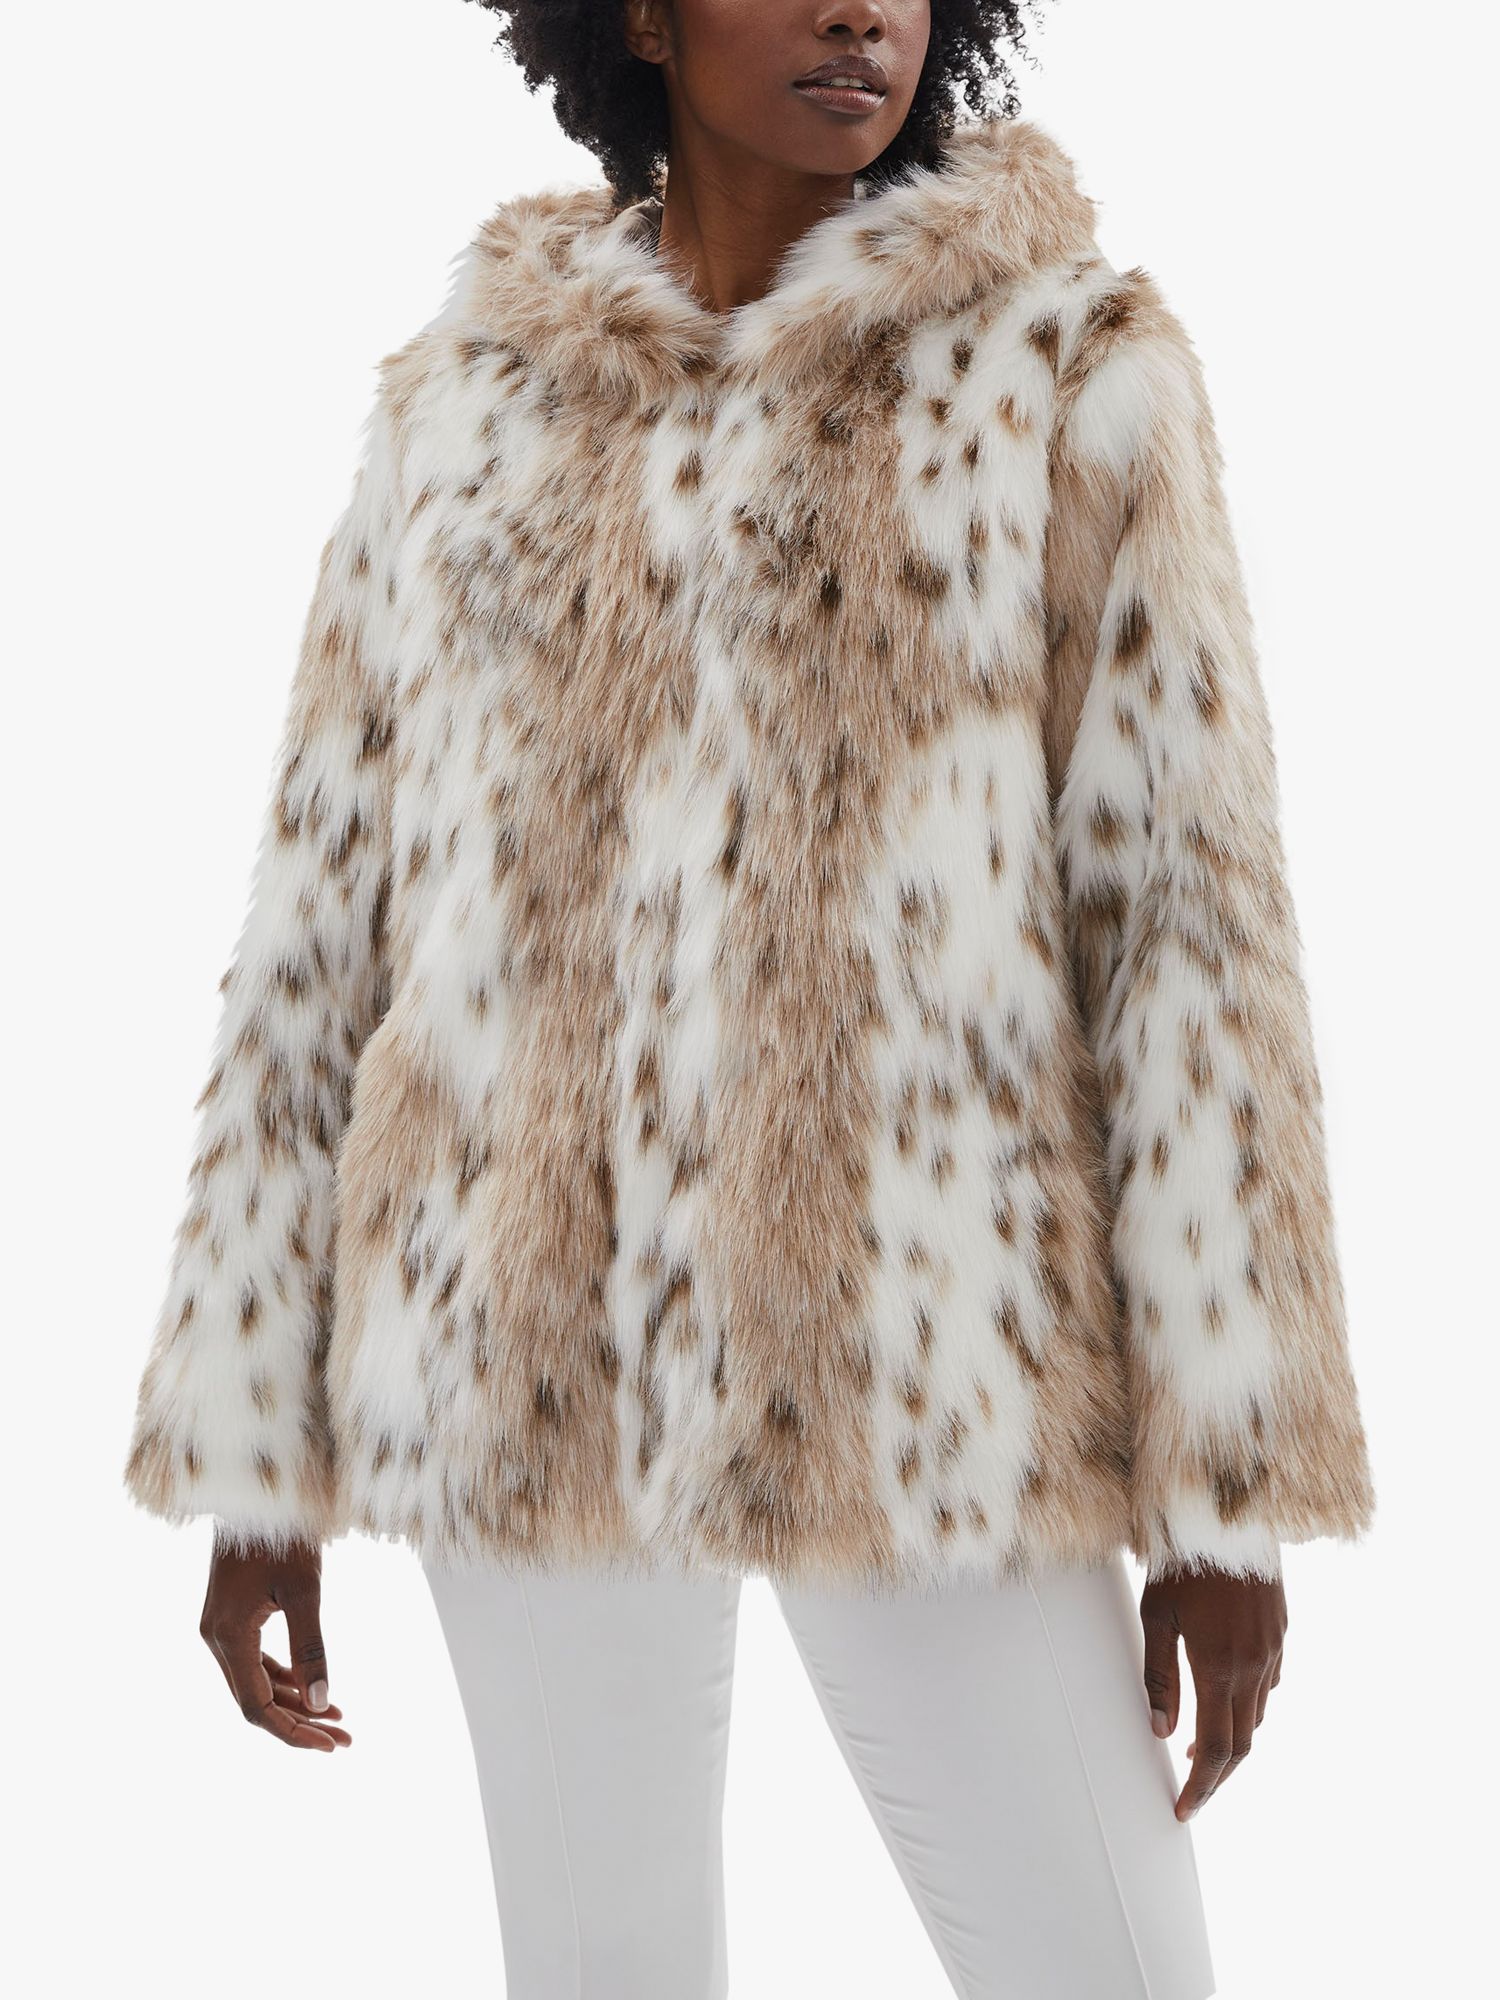 James Lakeland Lynx Faux Fur Coat, Multi